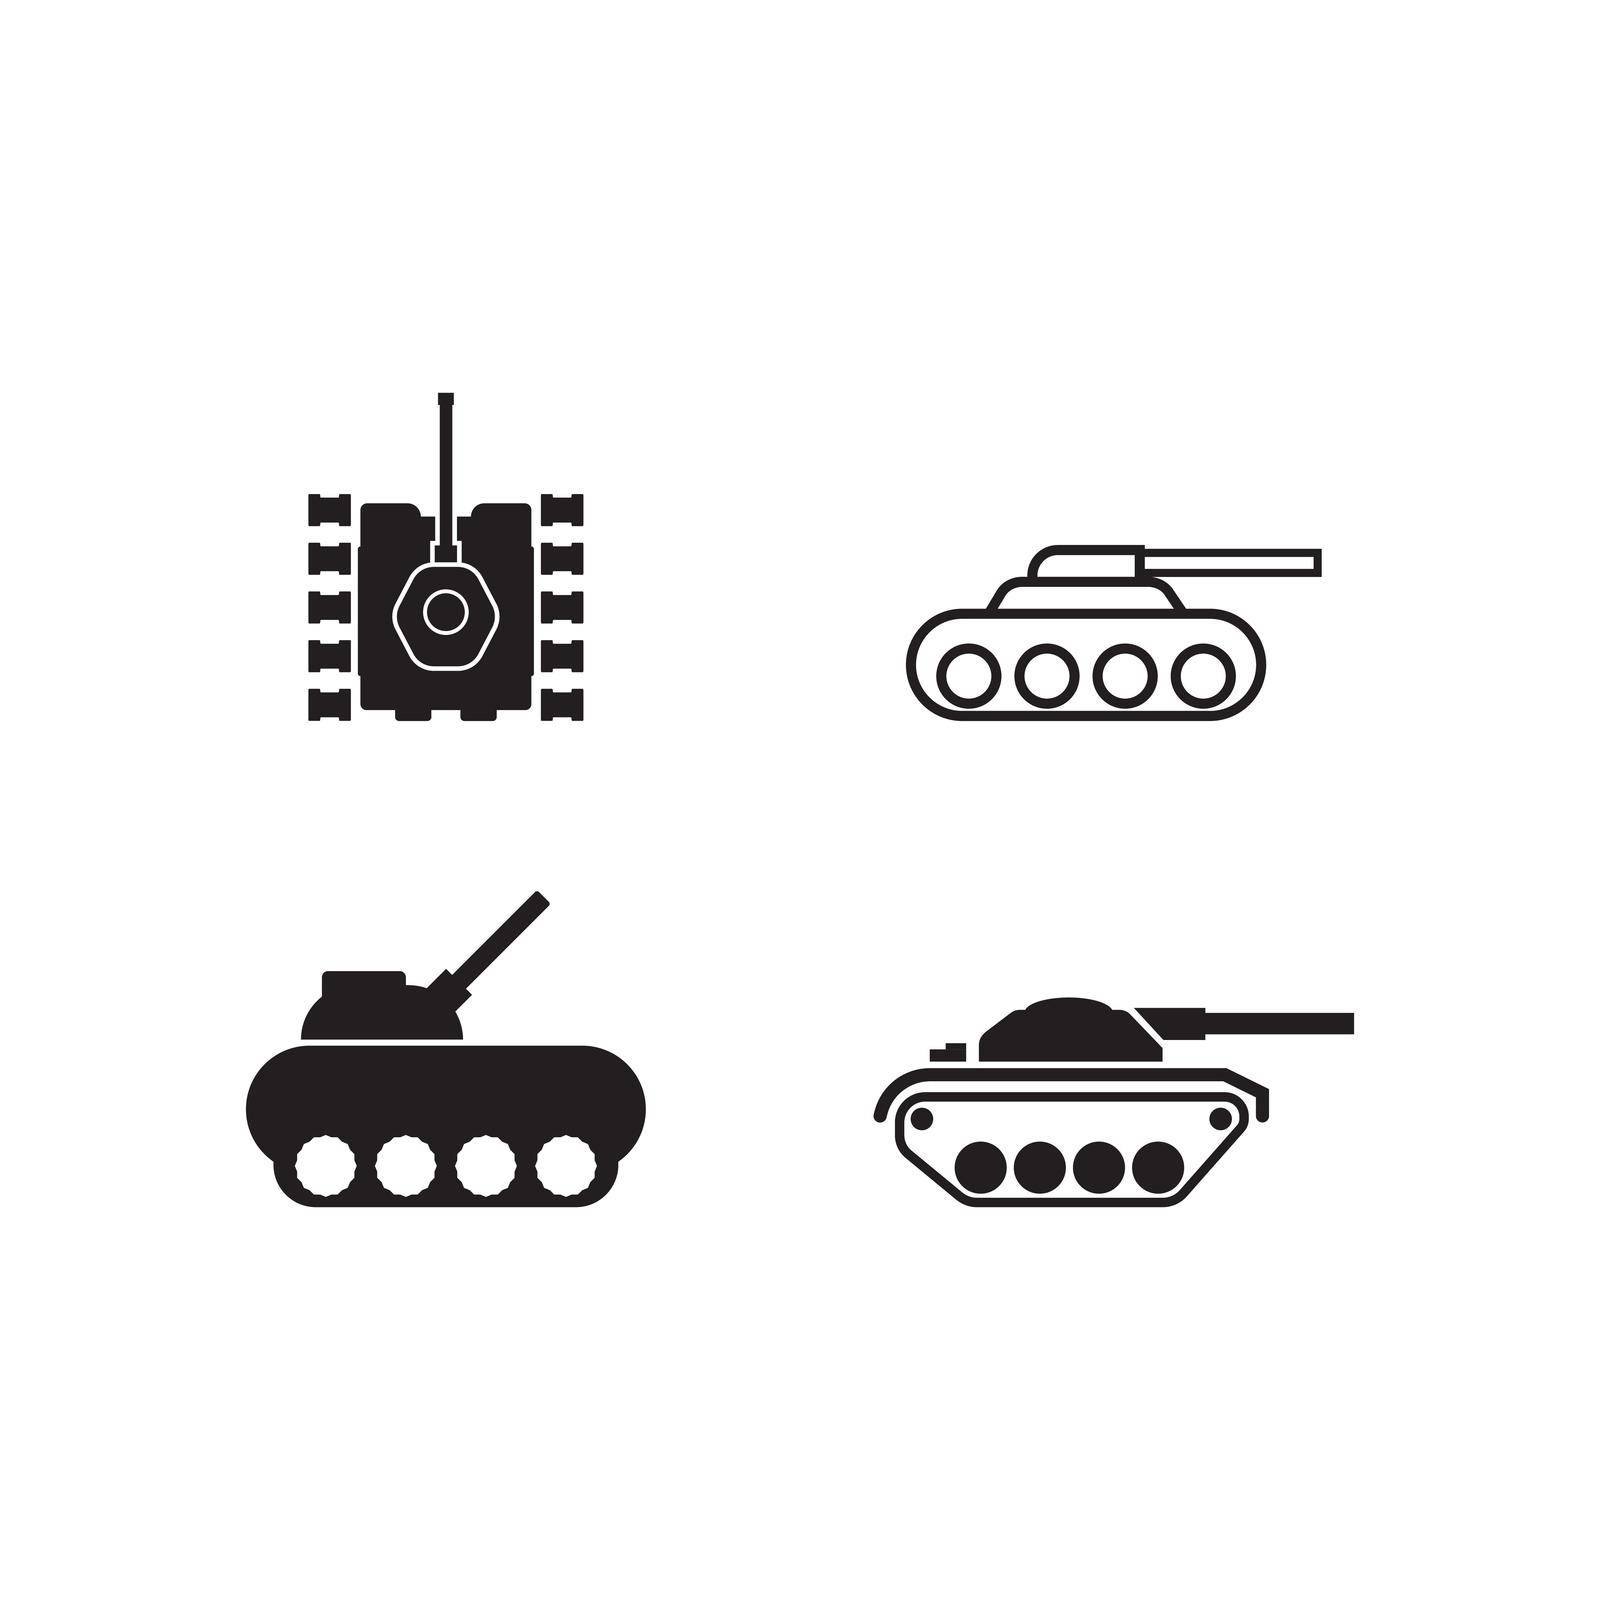 Military tank icon vector design illustration template